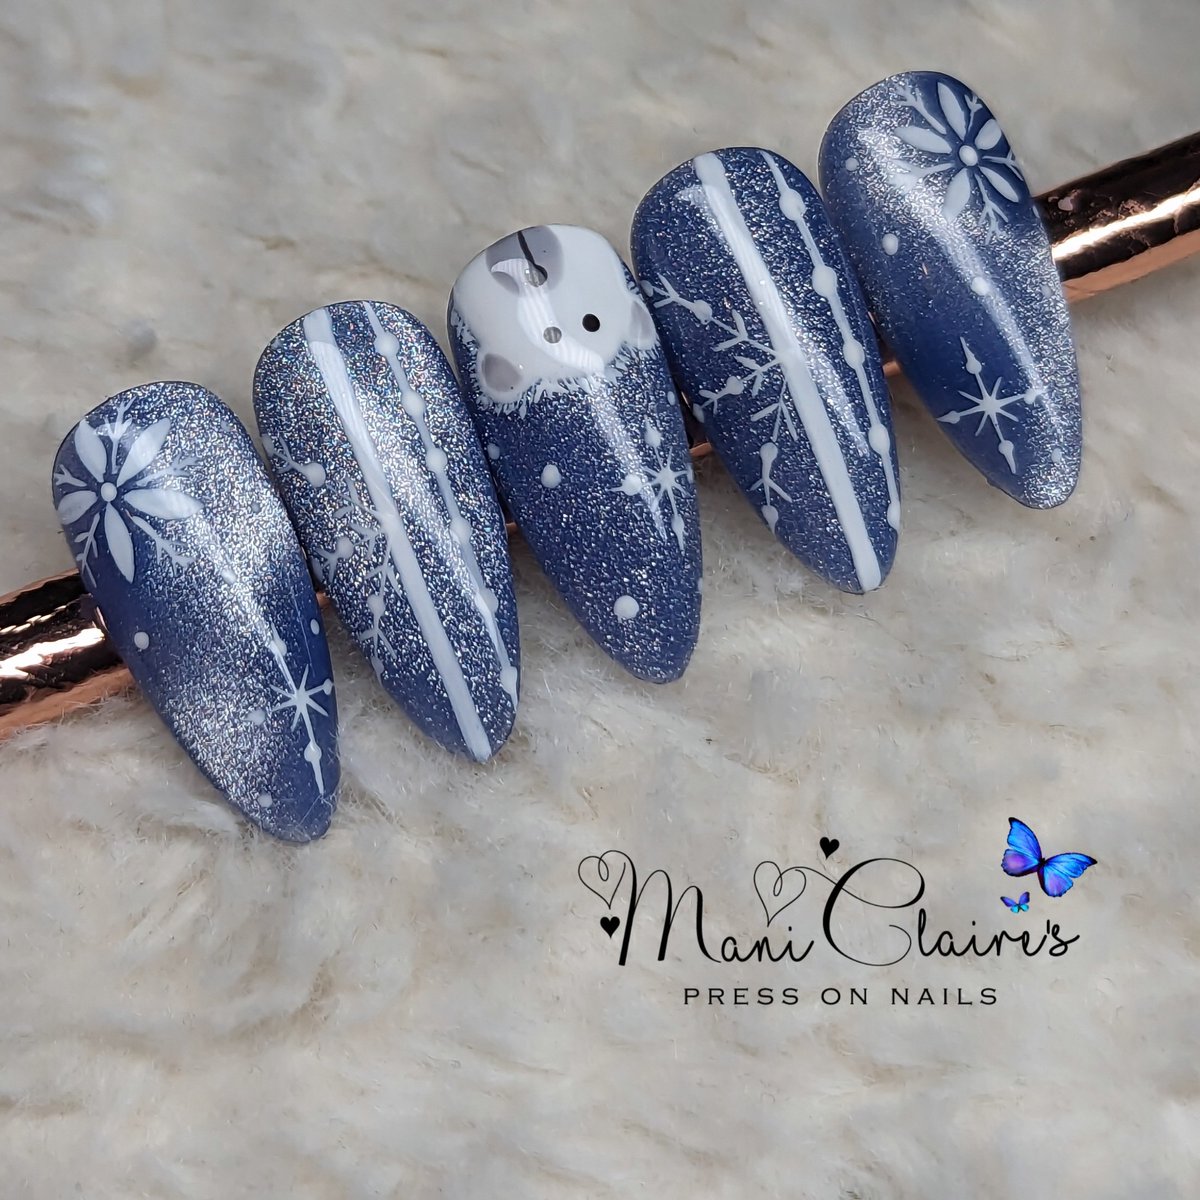 Christmas/Holiday nails ❄️💙
#pressonnails #pressons #gel #gelnails #nailart #gelnailart #naildesigns #nailartdesigns #winter #Christmas